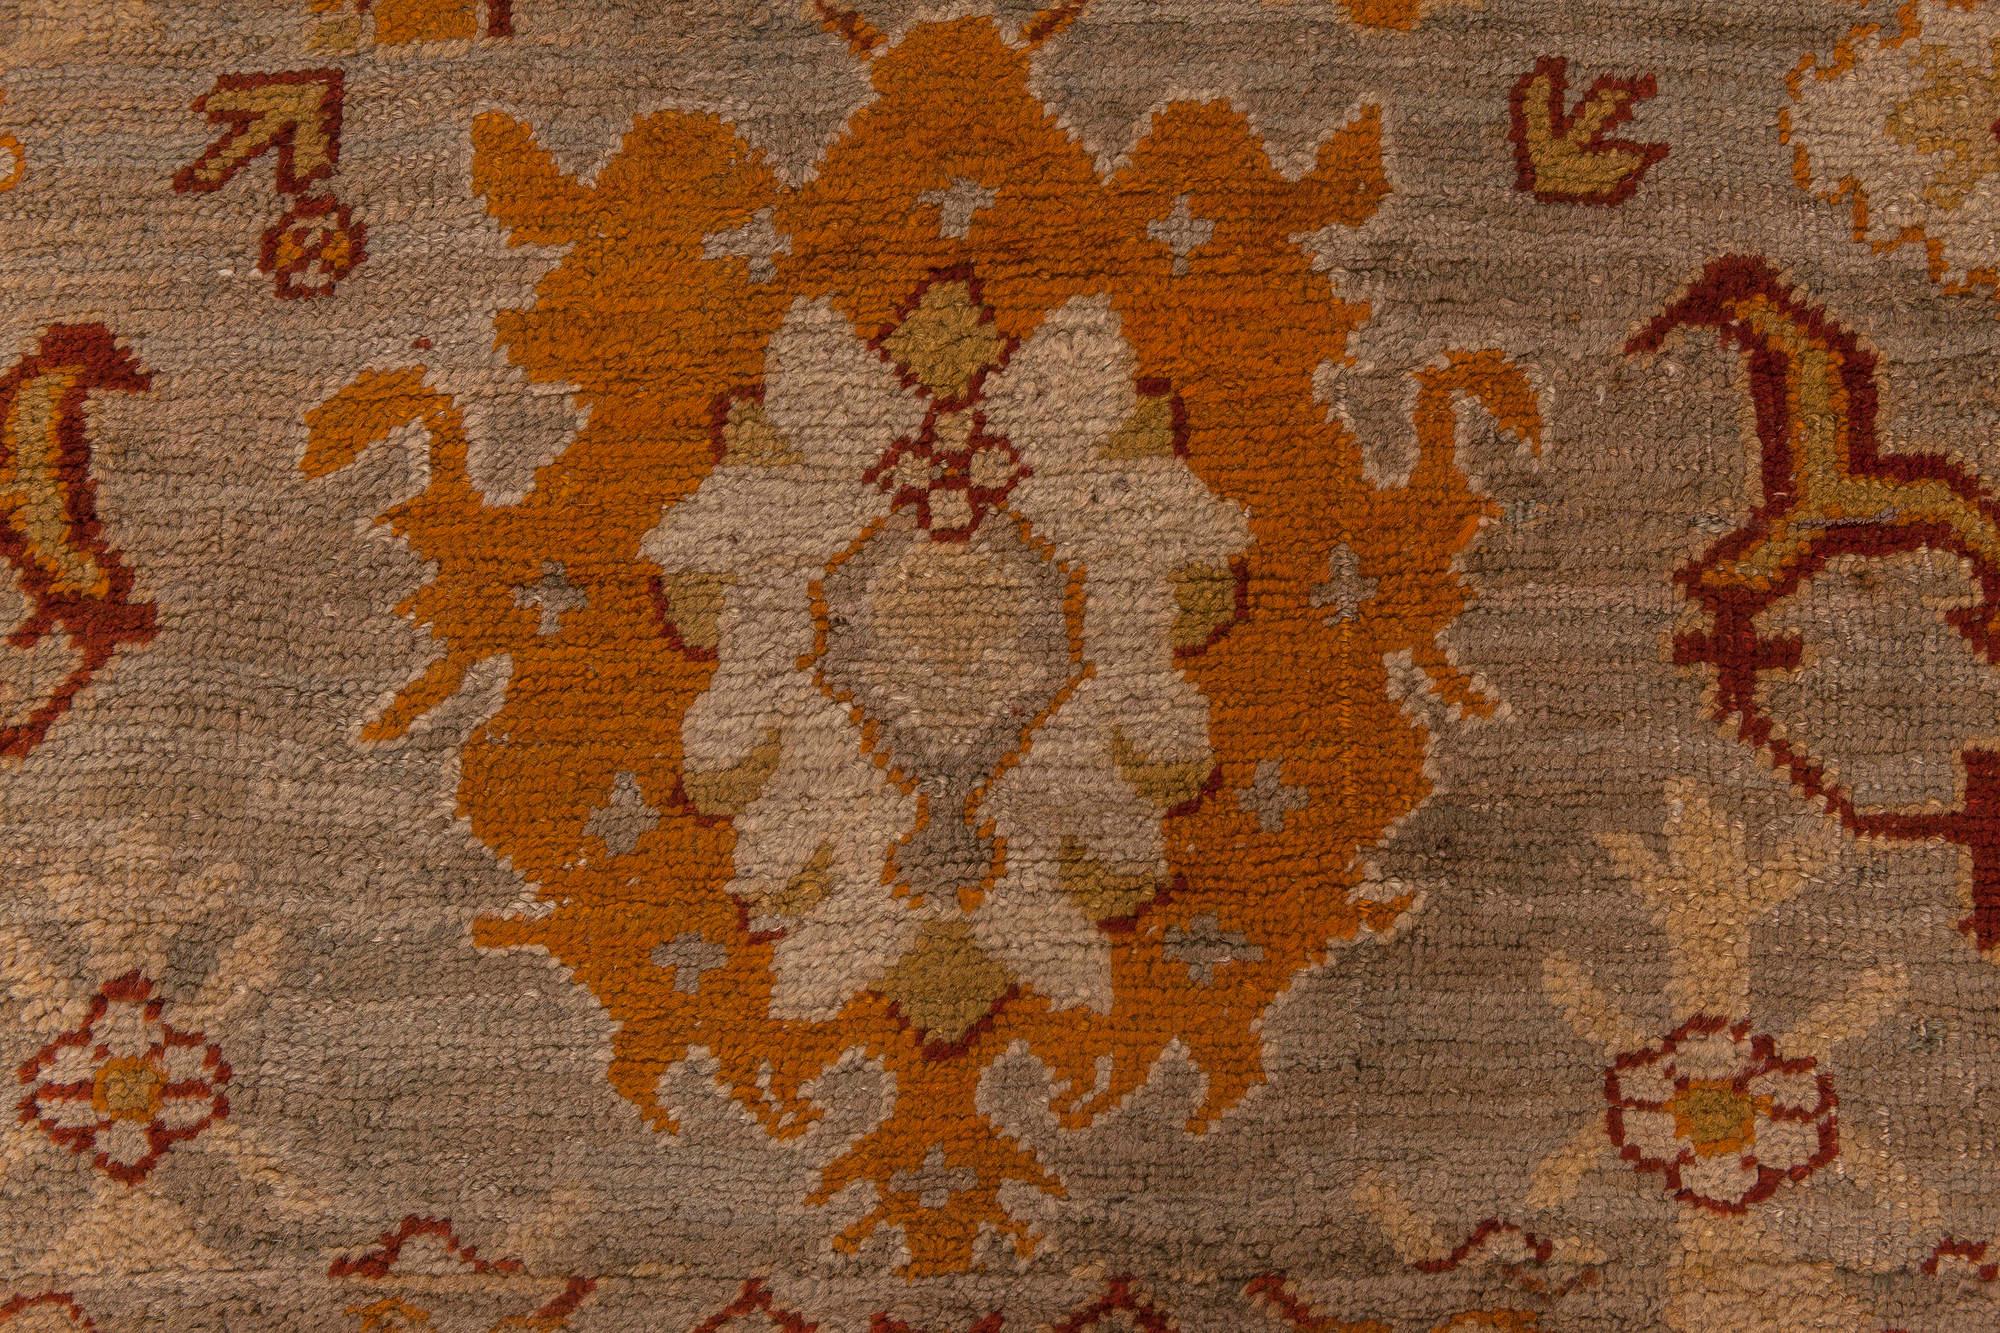 Antique Turkish Oushak Handwoven Wool Rug (size adjusted)
Size: 14'1